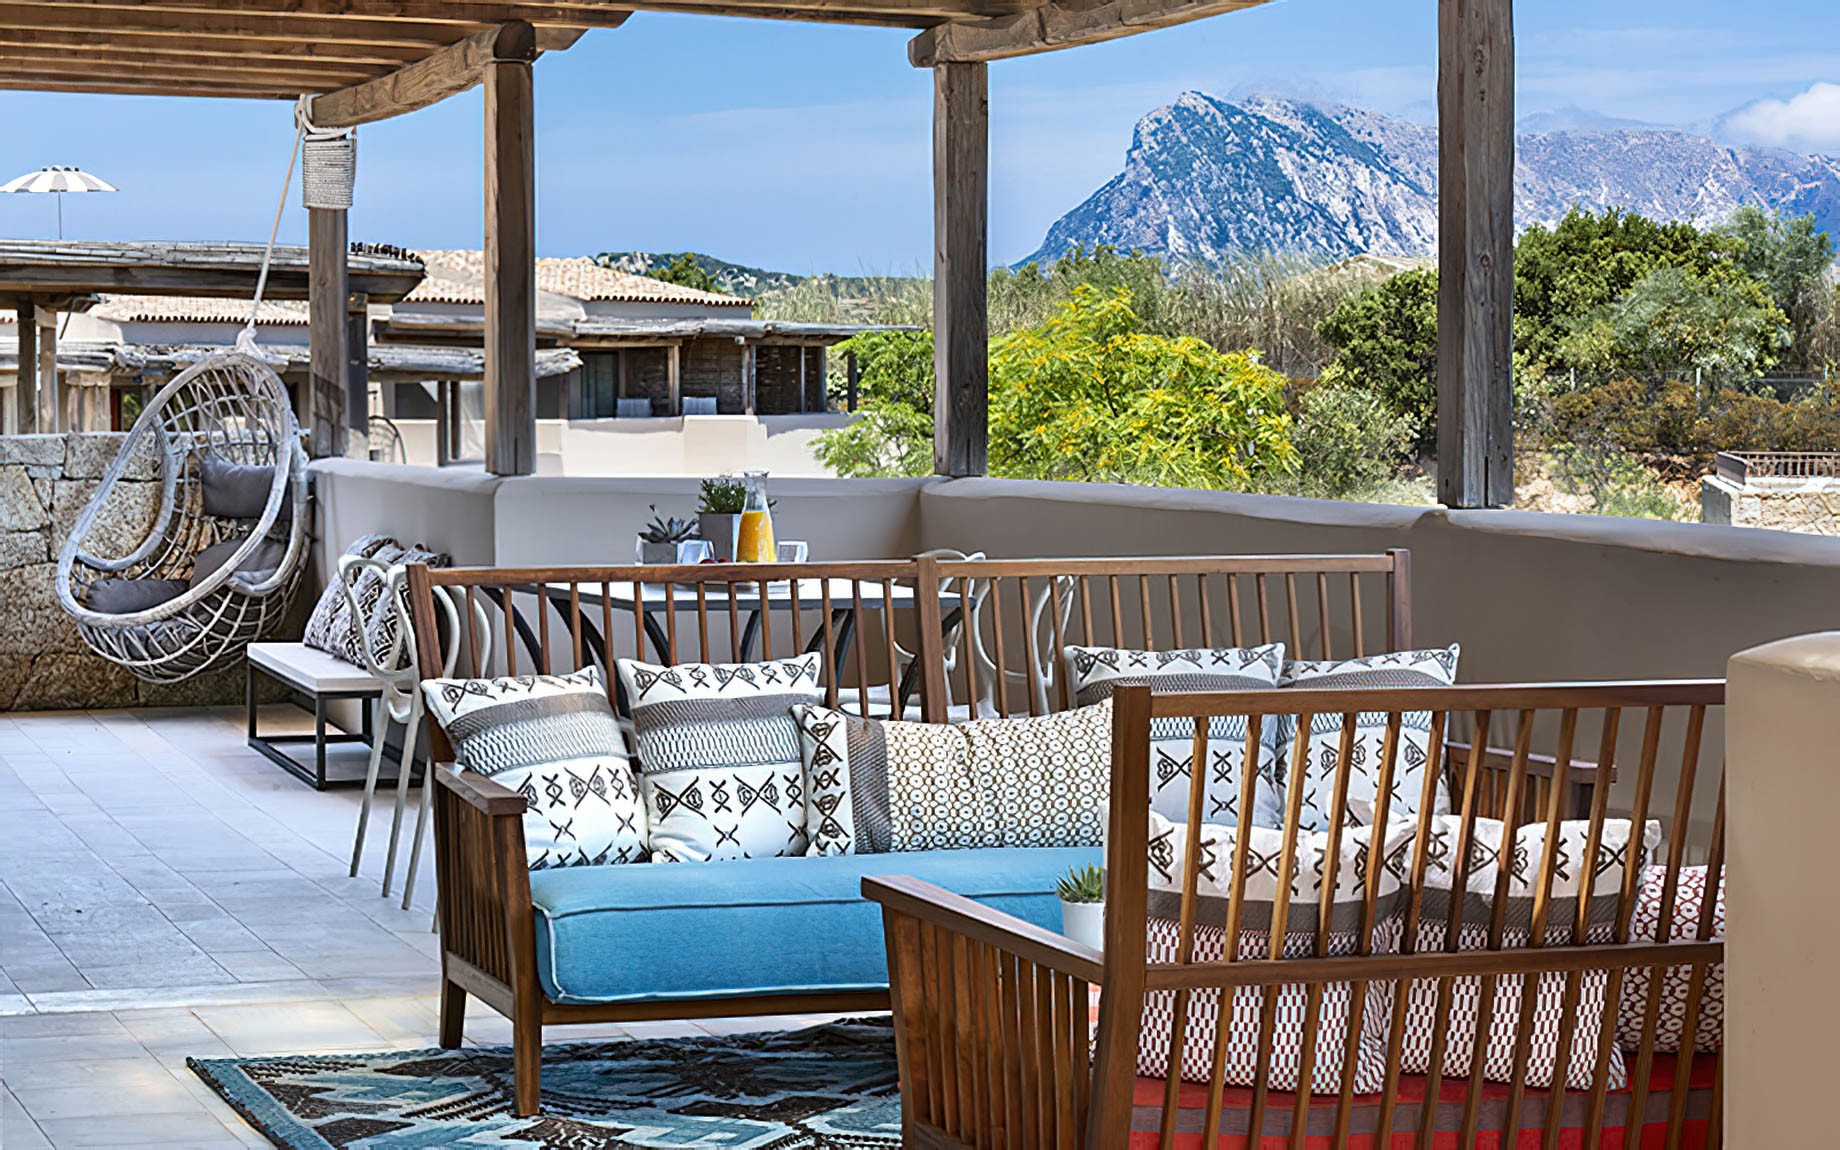 Baglioni Resort Sardinia – San Teodoro, Sardegna, Italy – Maddalena Suite Terrace Mountain View